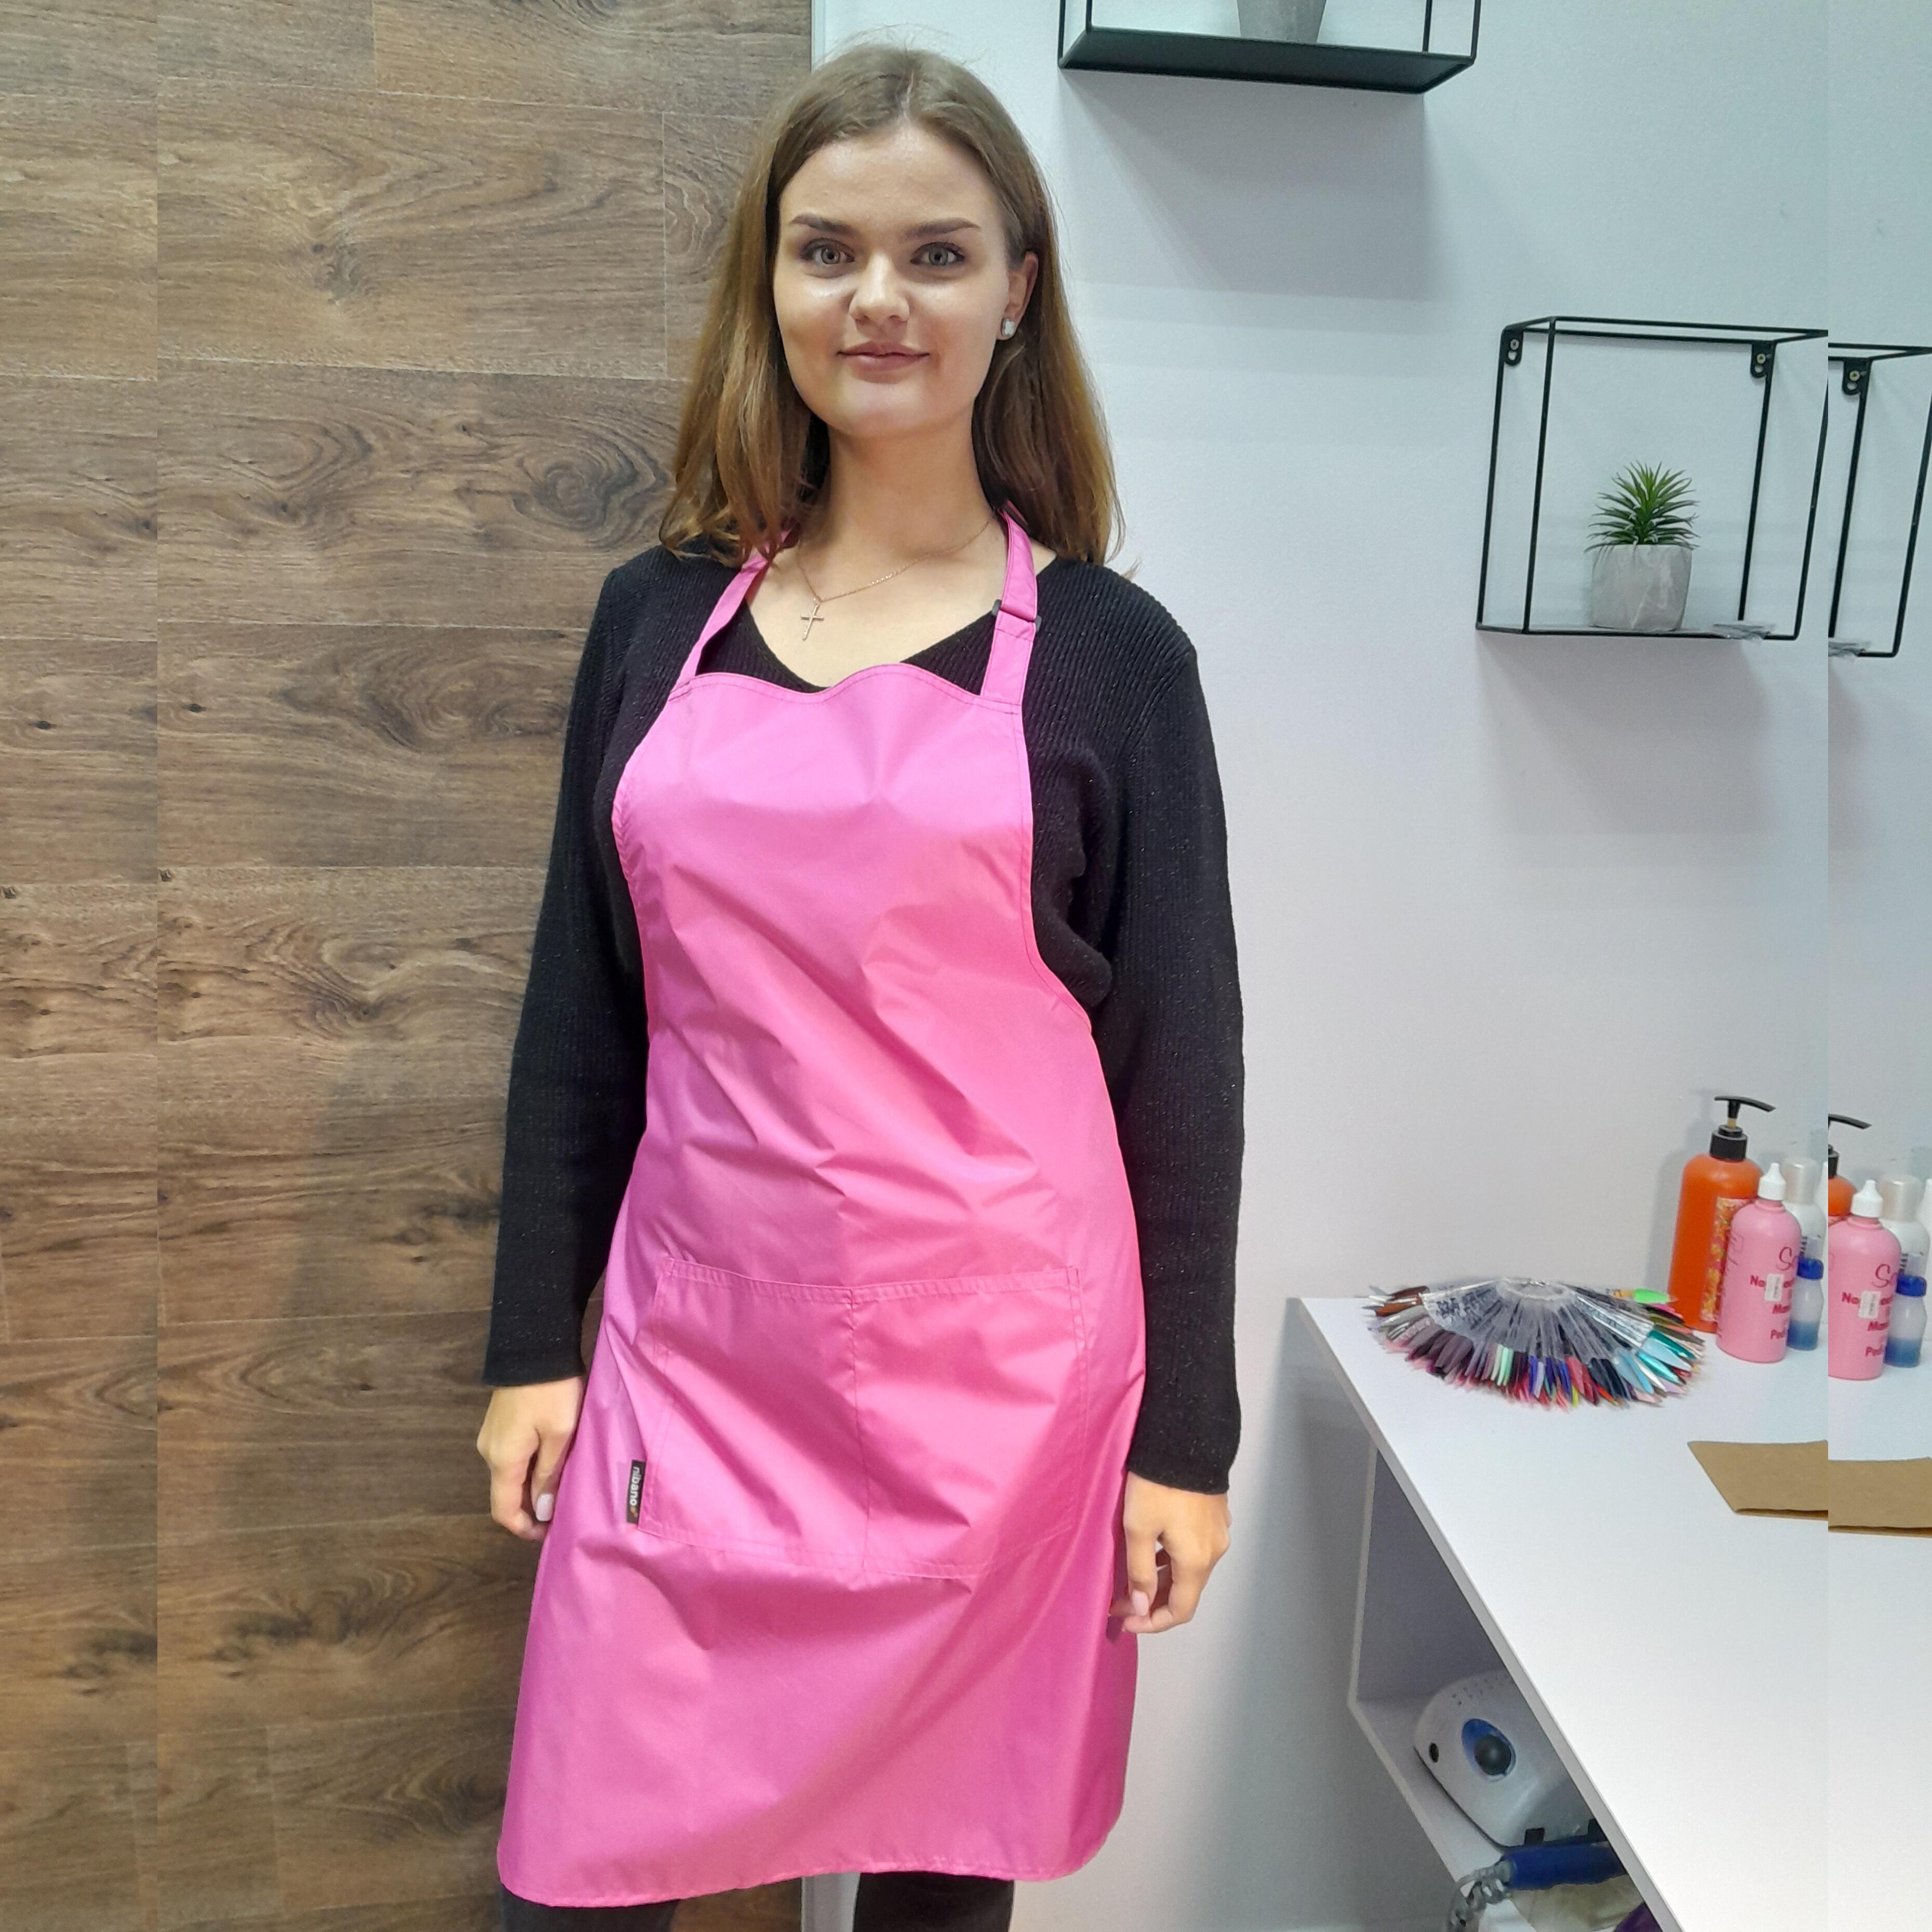 Nibano waterproof hair cutting apron pink barbie